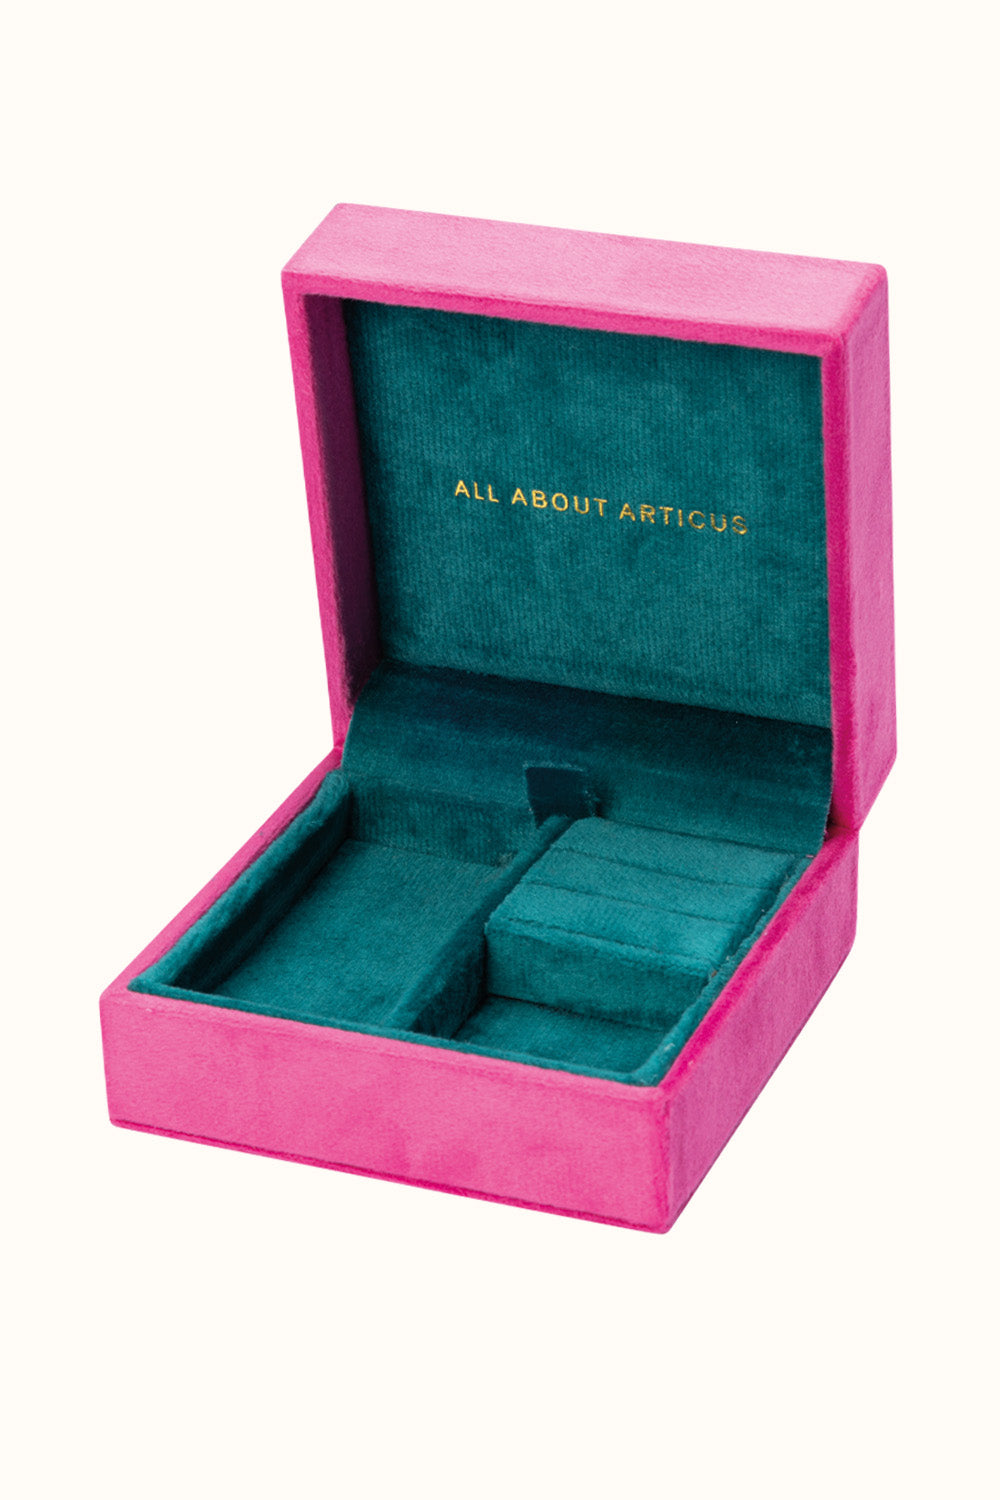 The Pink Jewellery Box